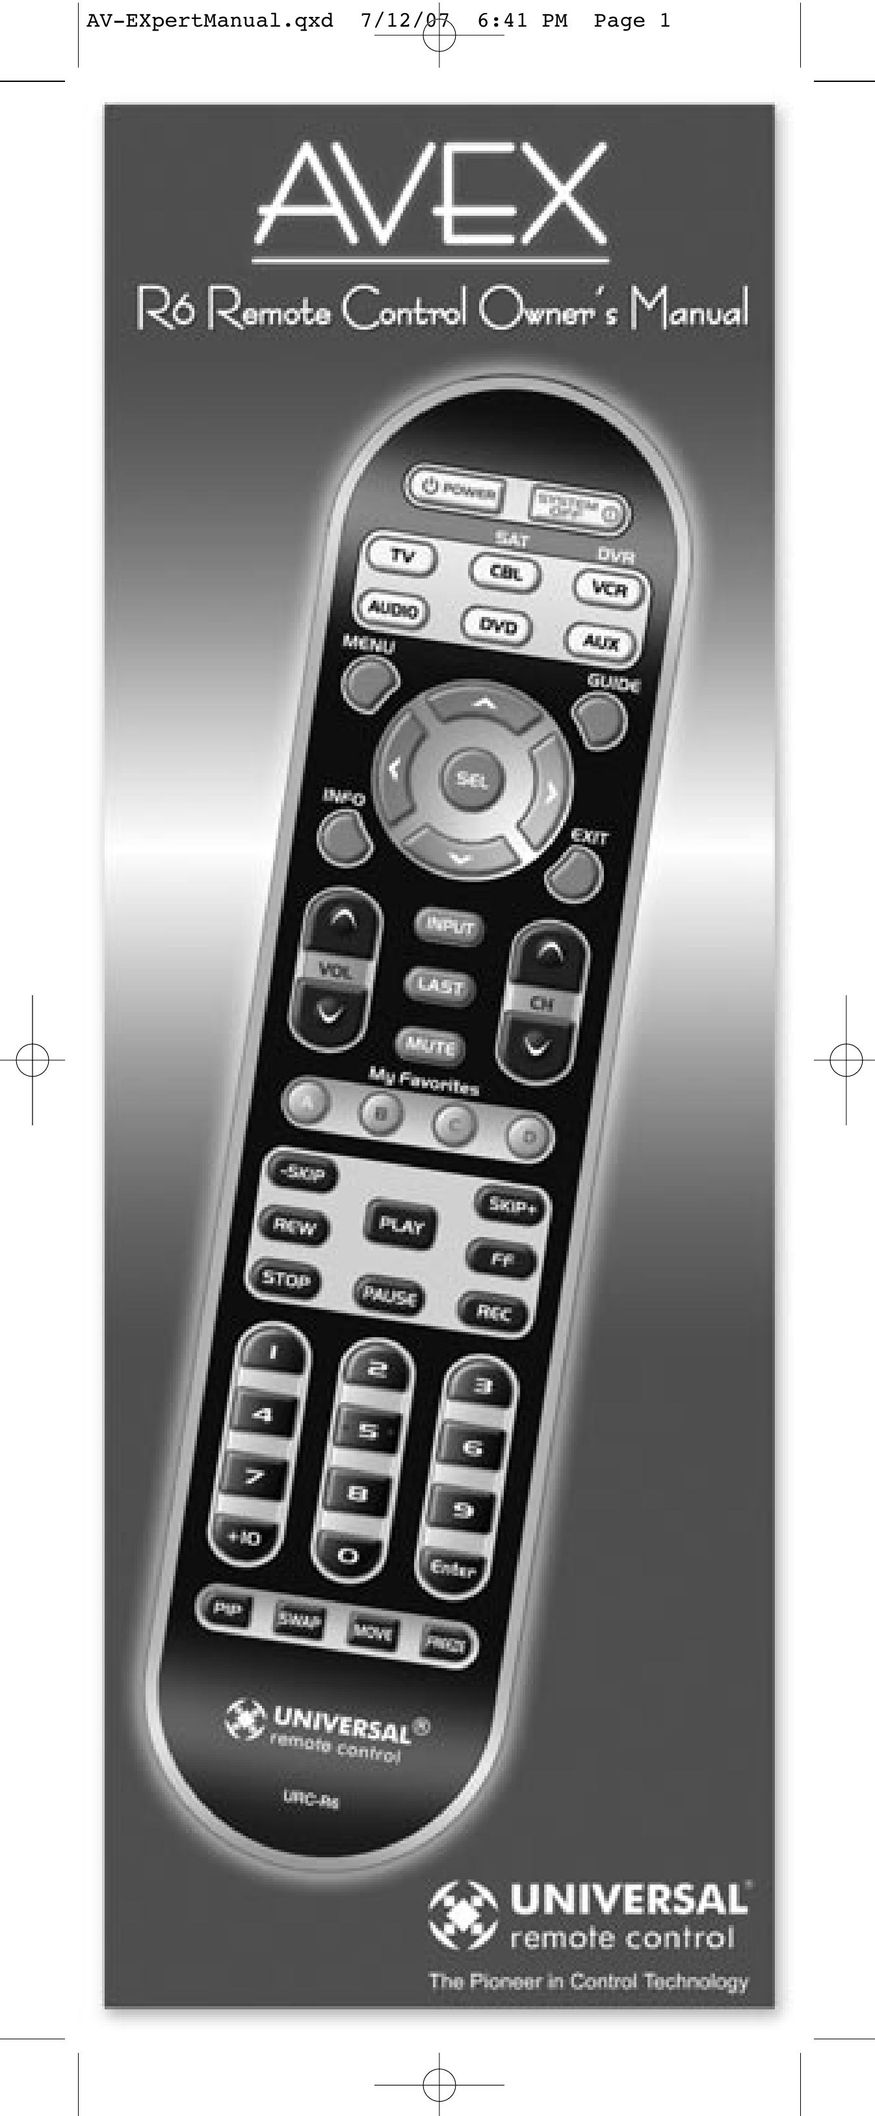 Universal Remote Control AVEX R6 Universal Remote User Manual